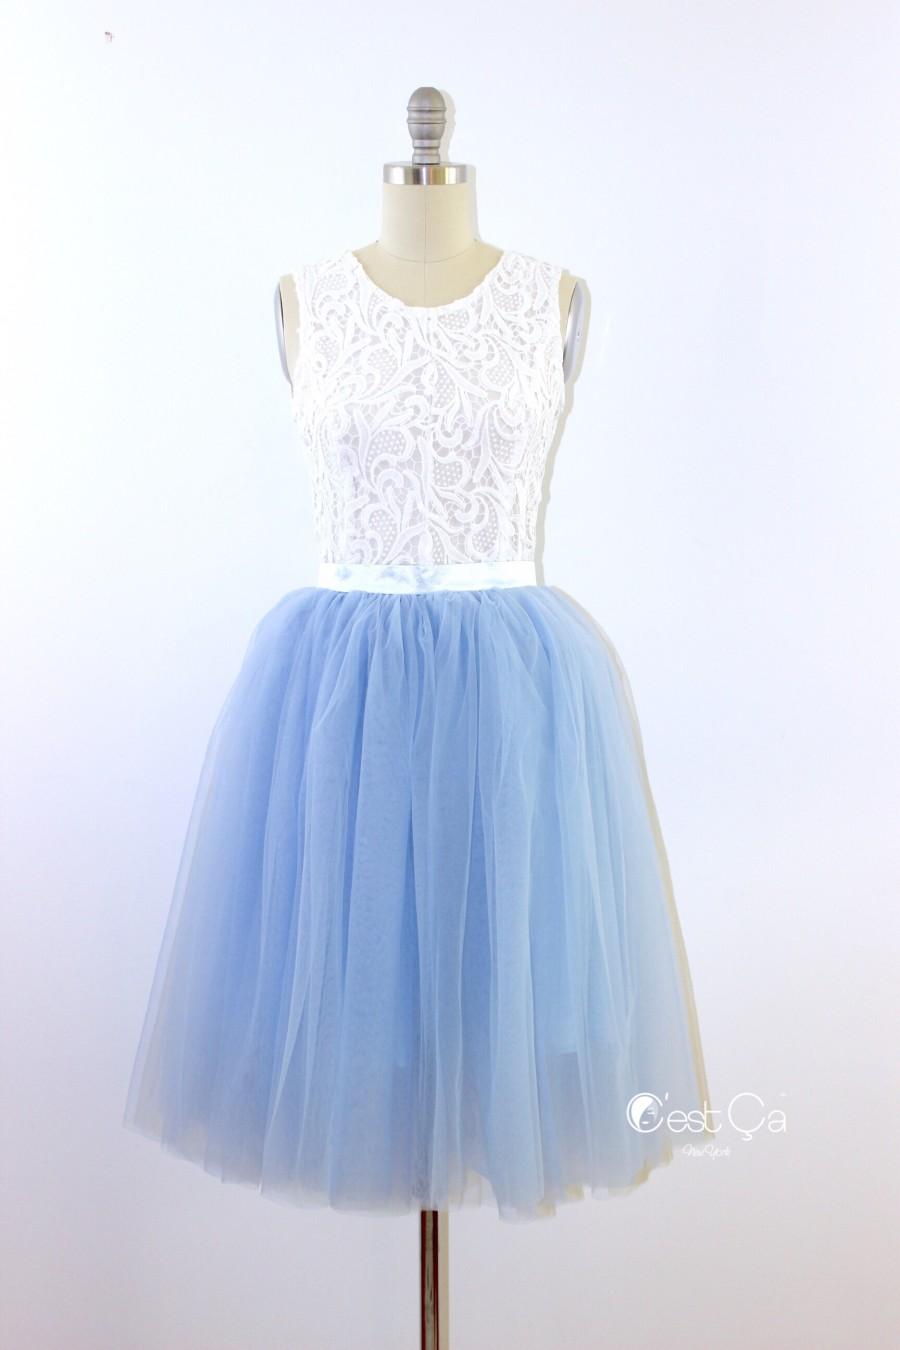 Mariage - Colette Serenity Blue Tulle Skirt - Length 26" - C'est Ça New York